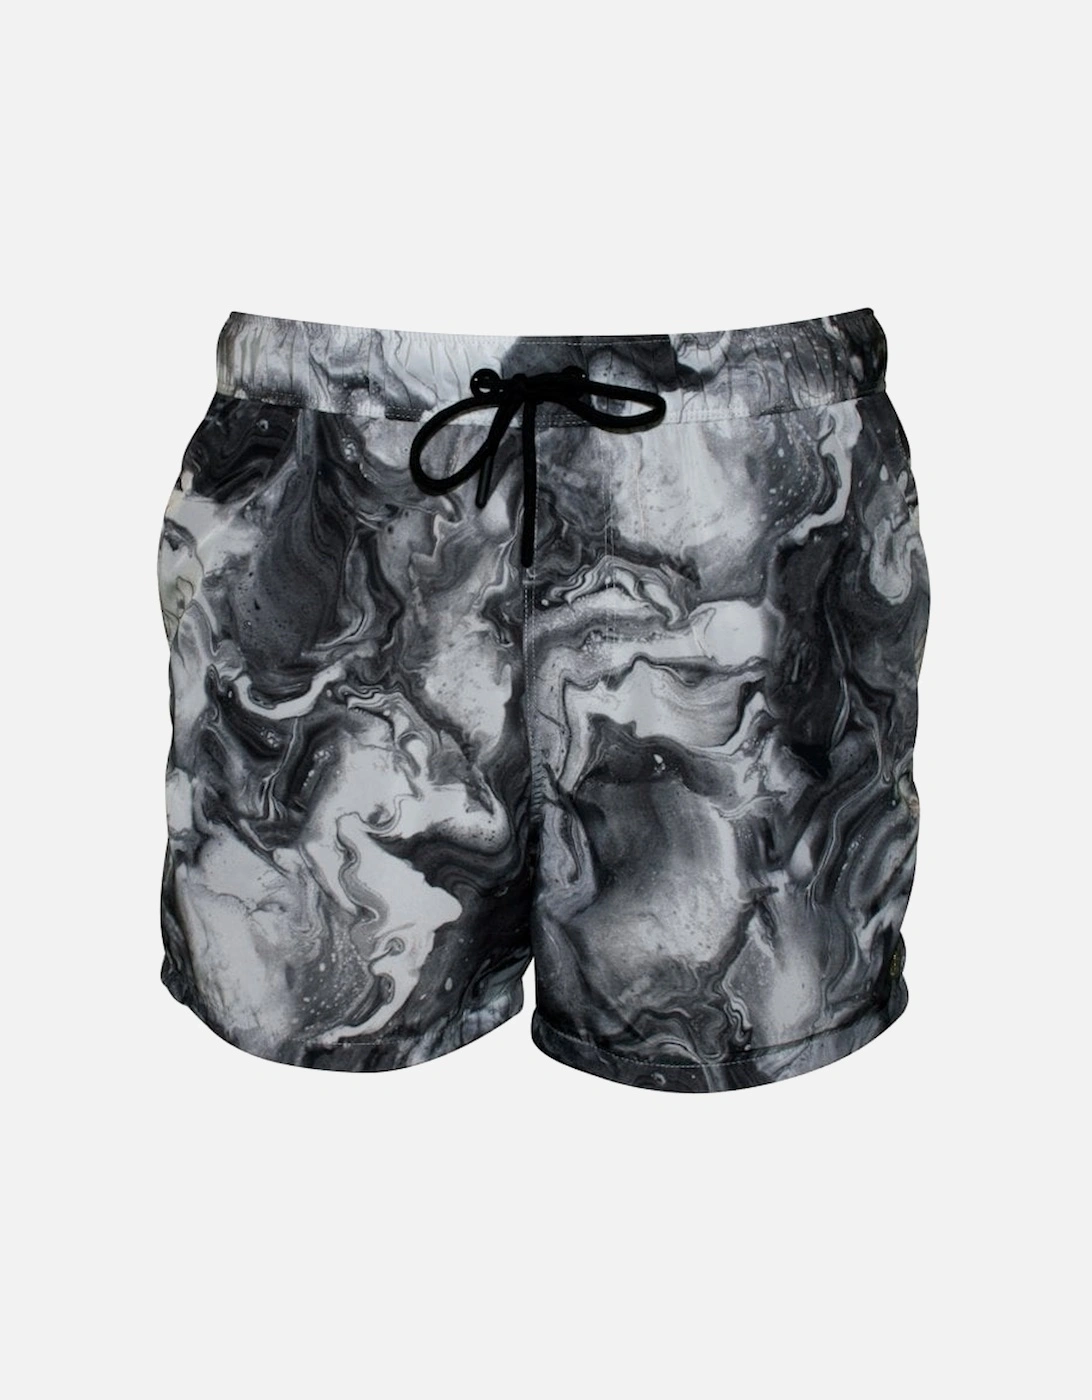 West Hampton Marble Print Swim Shorts, White/Black, 5 of 4